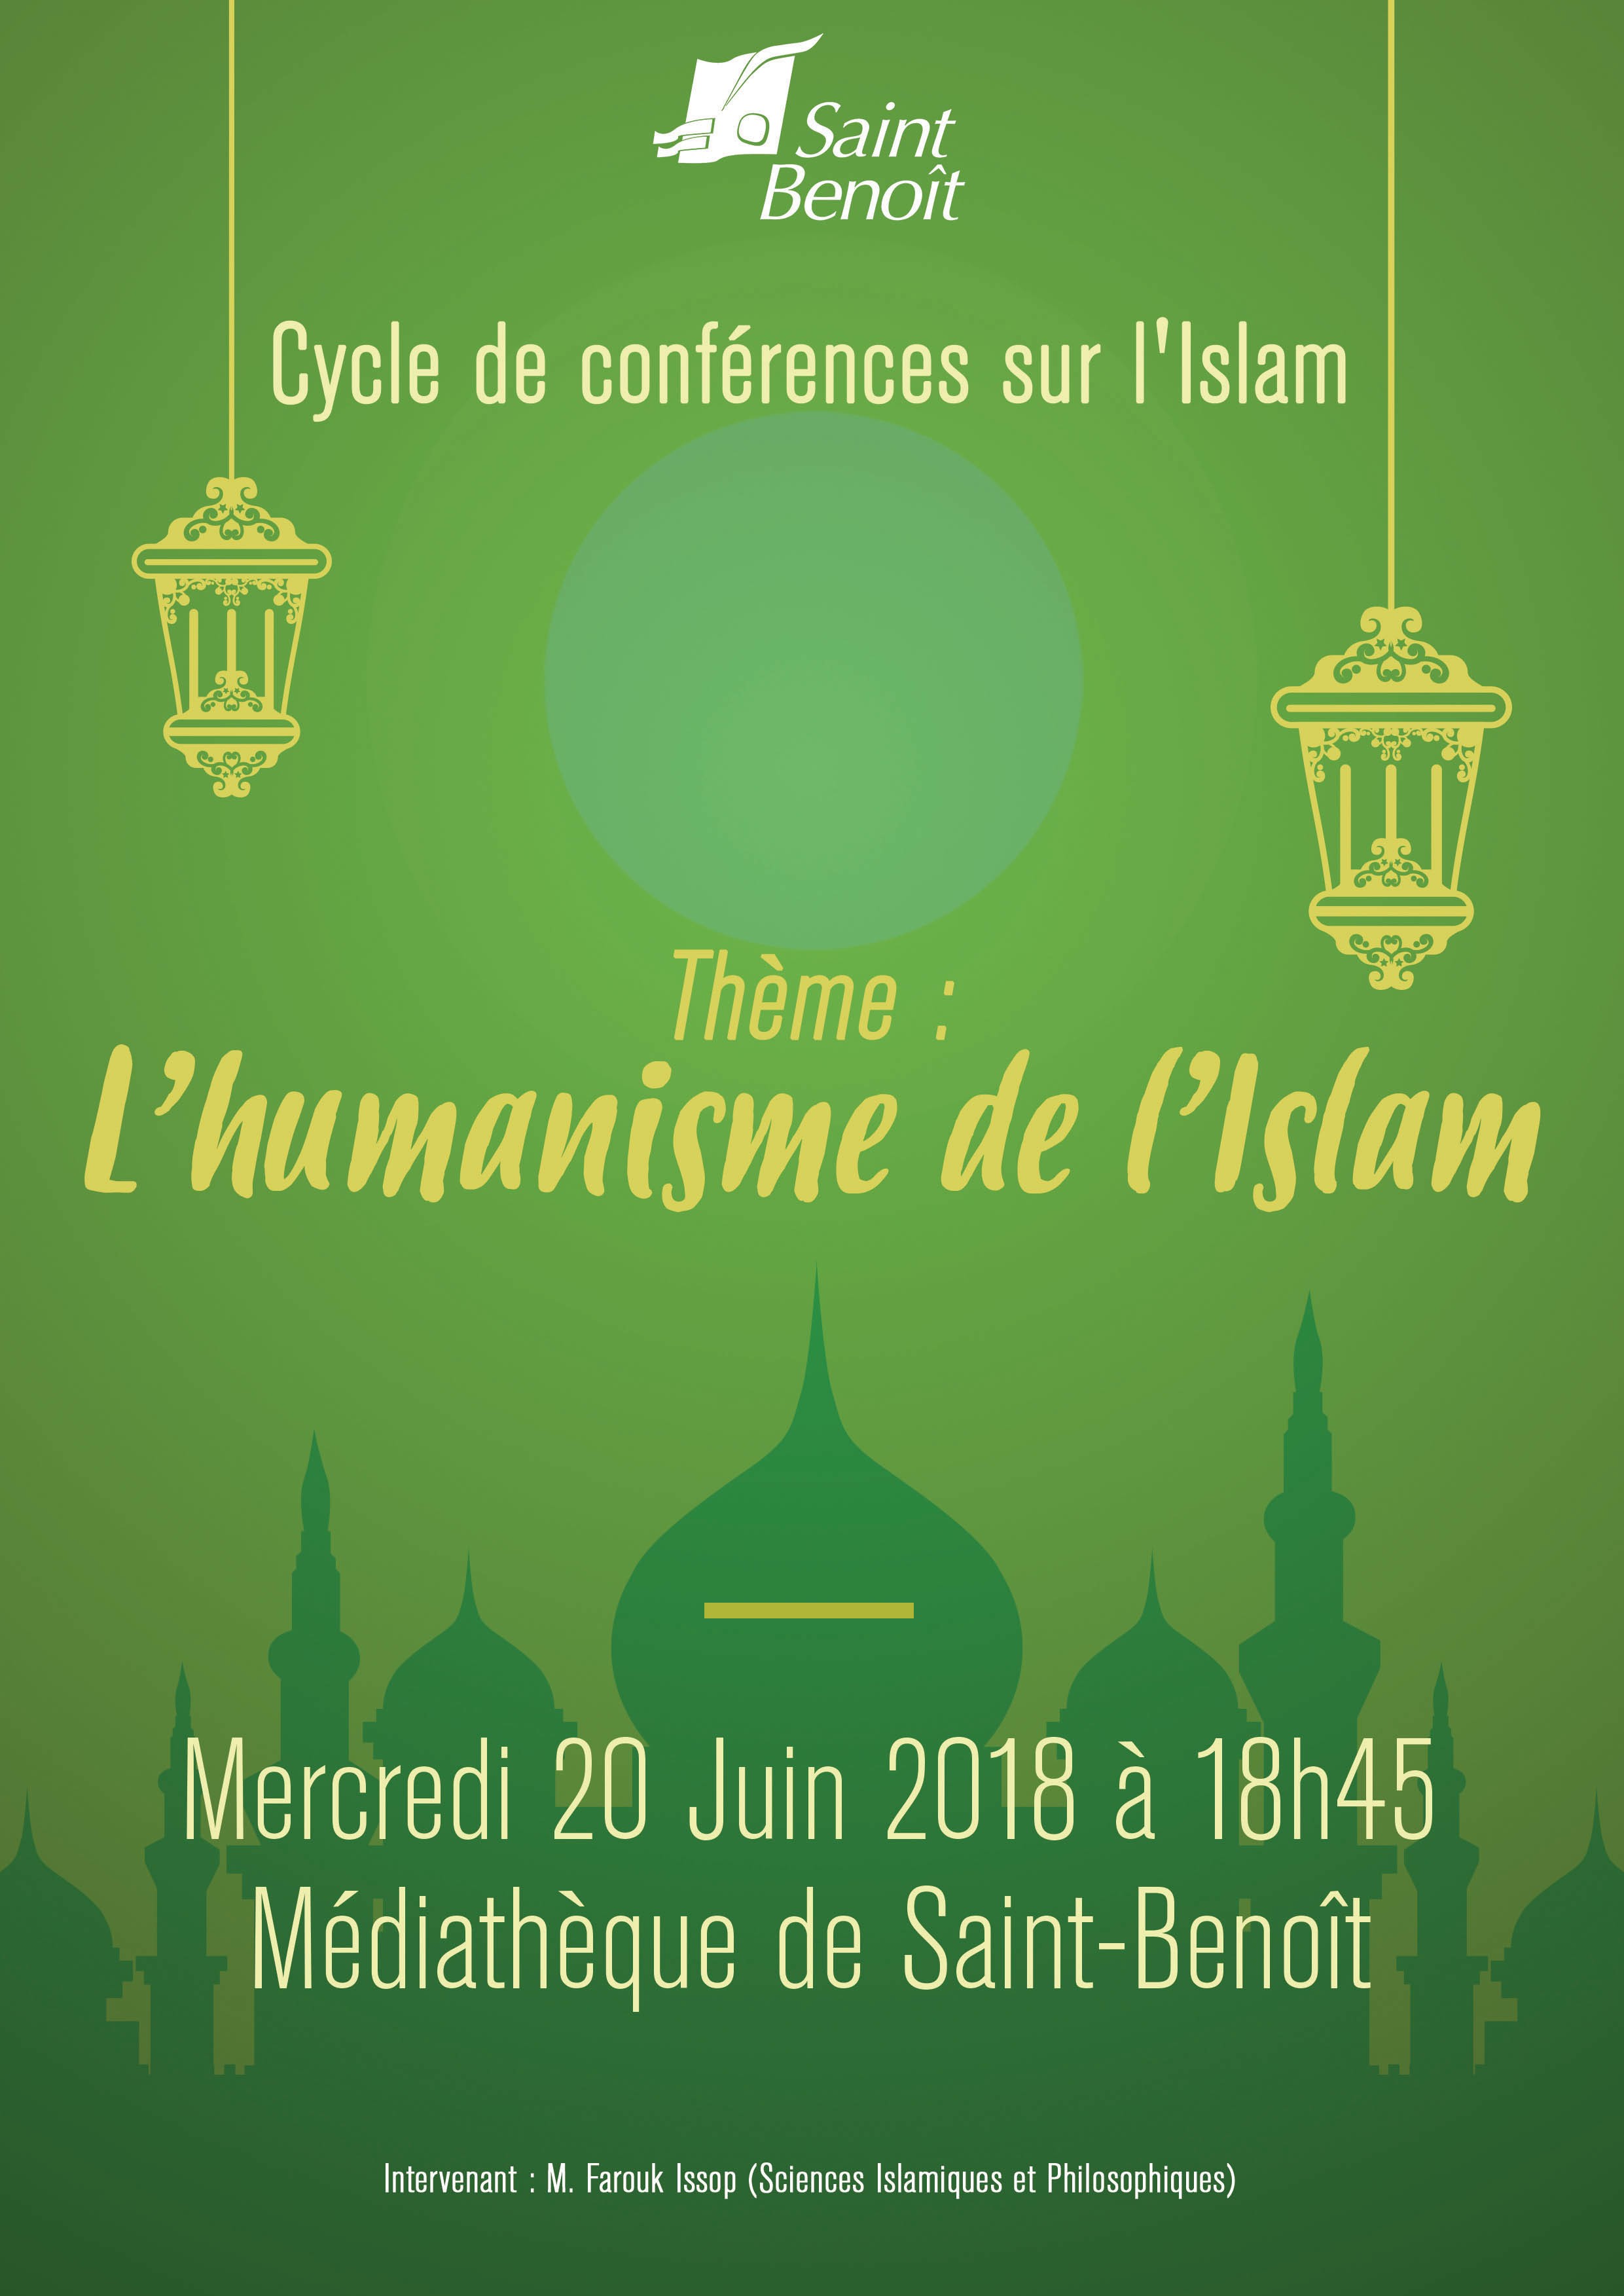 Conférence "L’Humanisme de l’Islam"